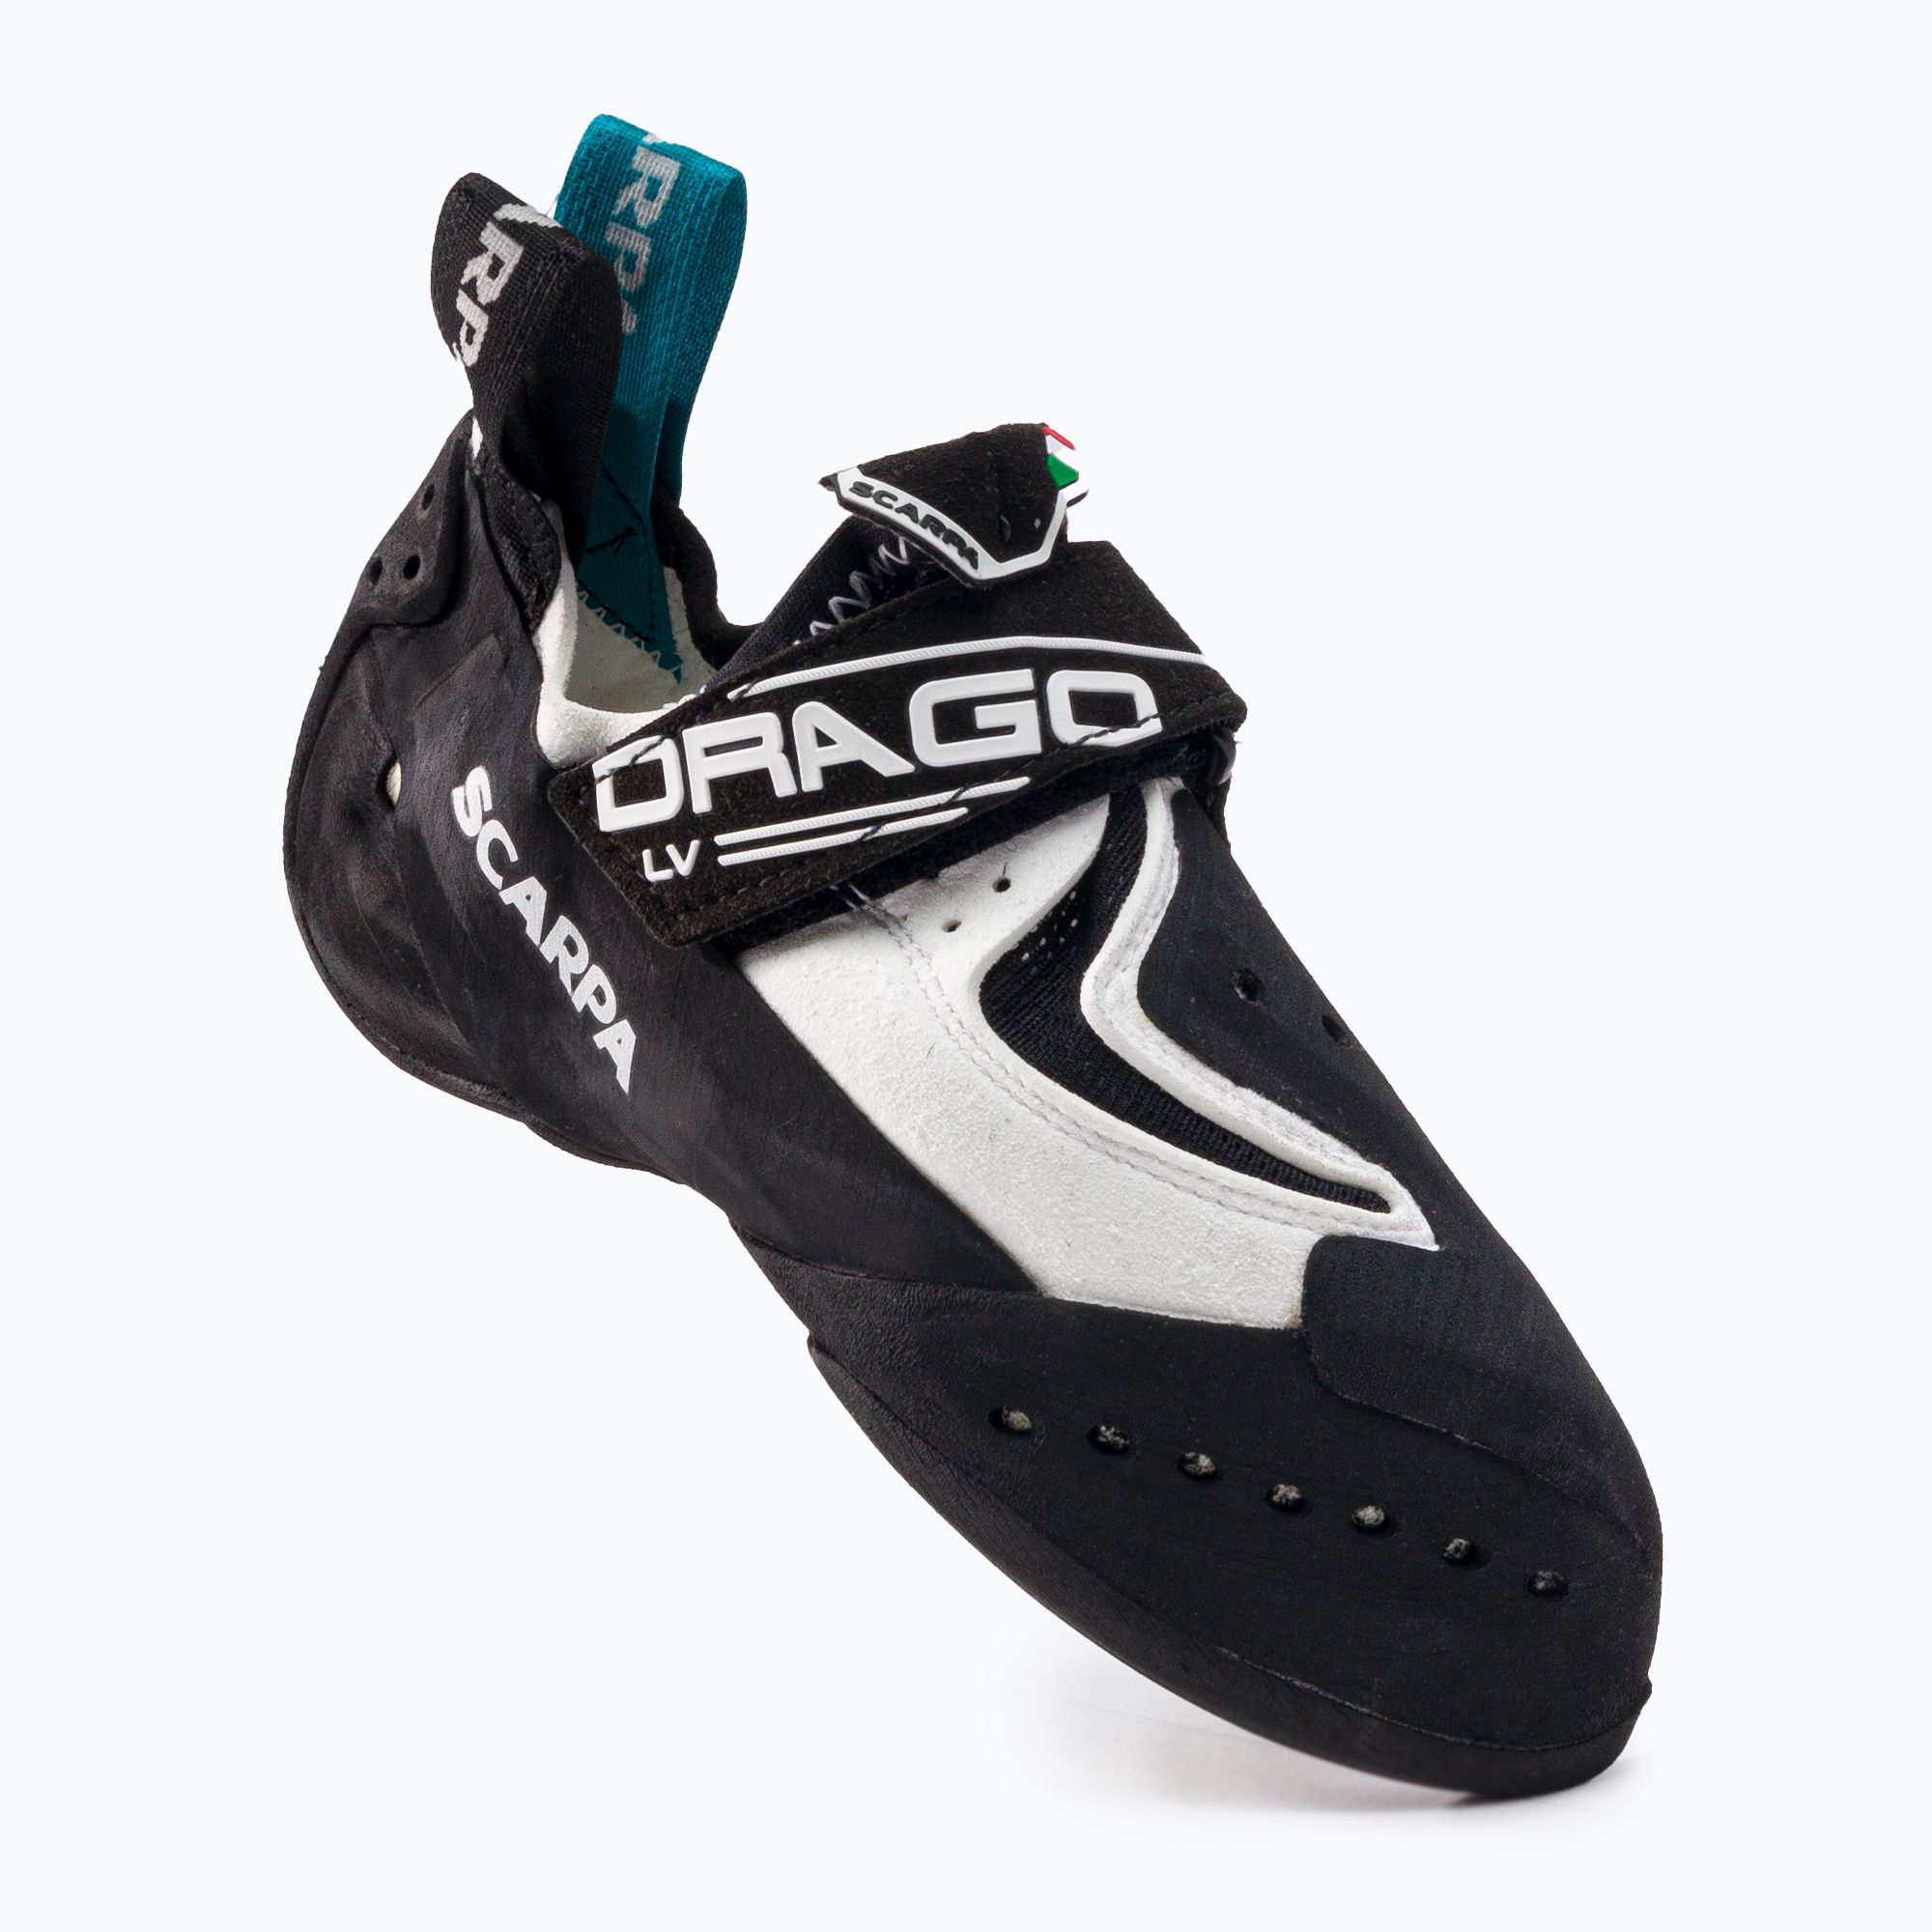 Drago LV Climbing Shoe